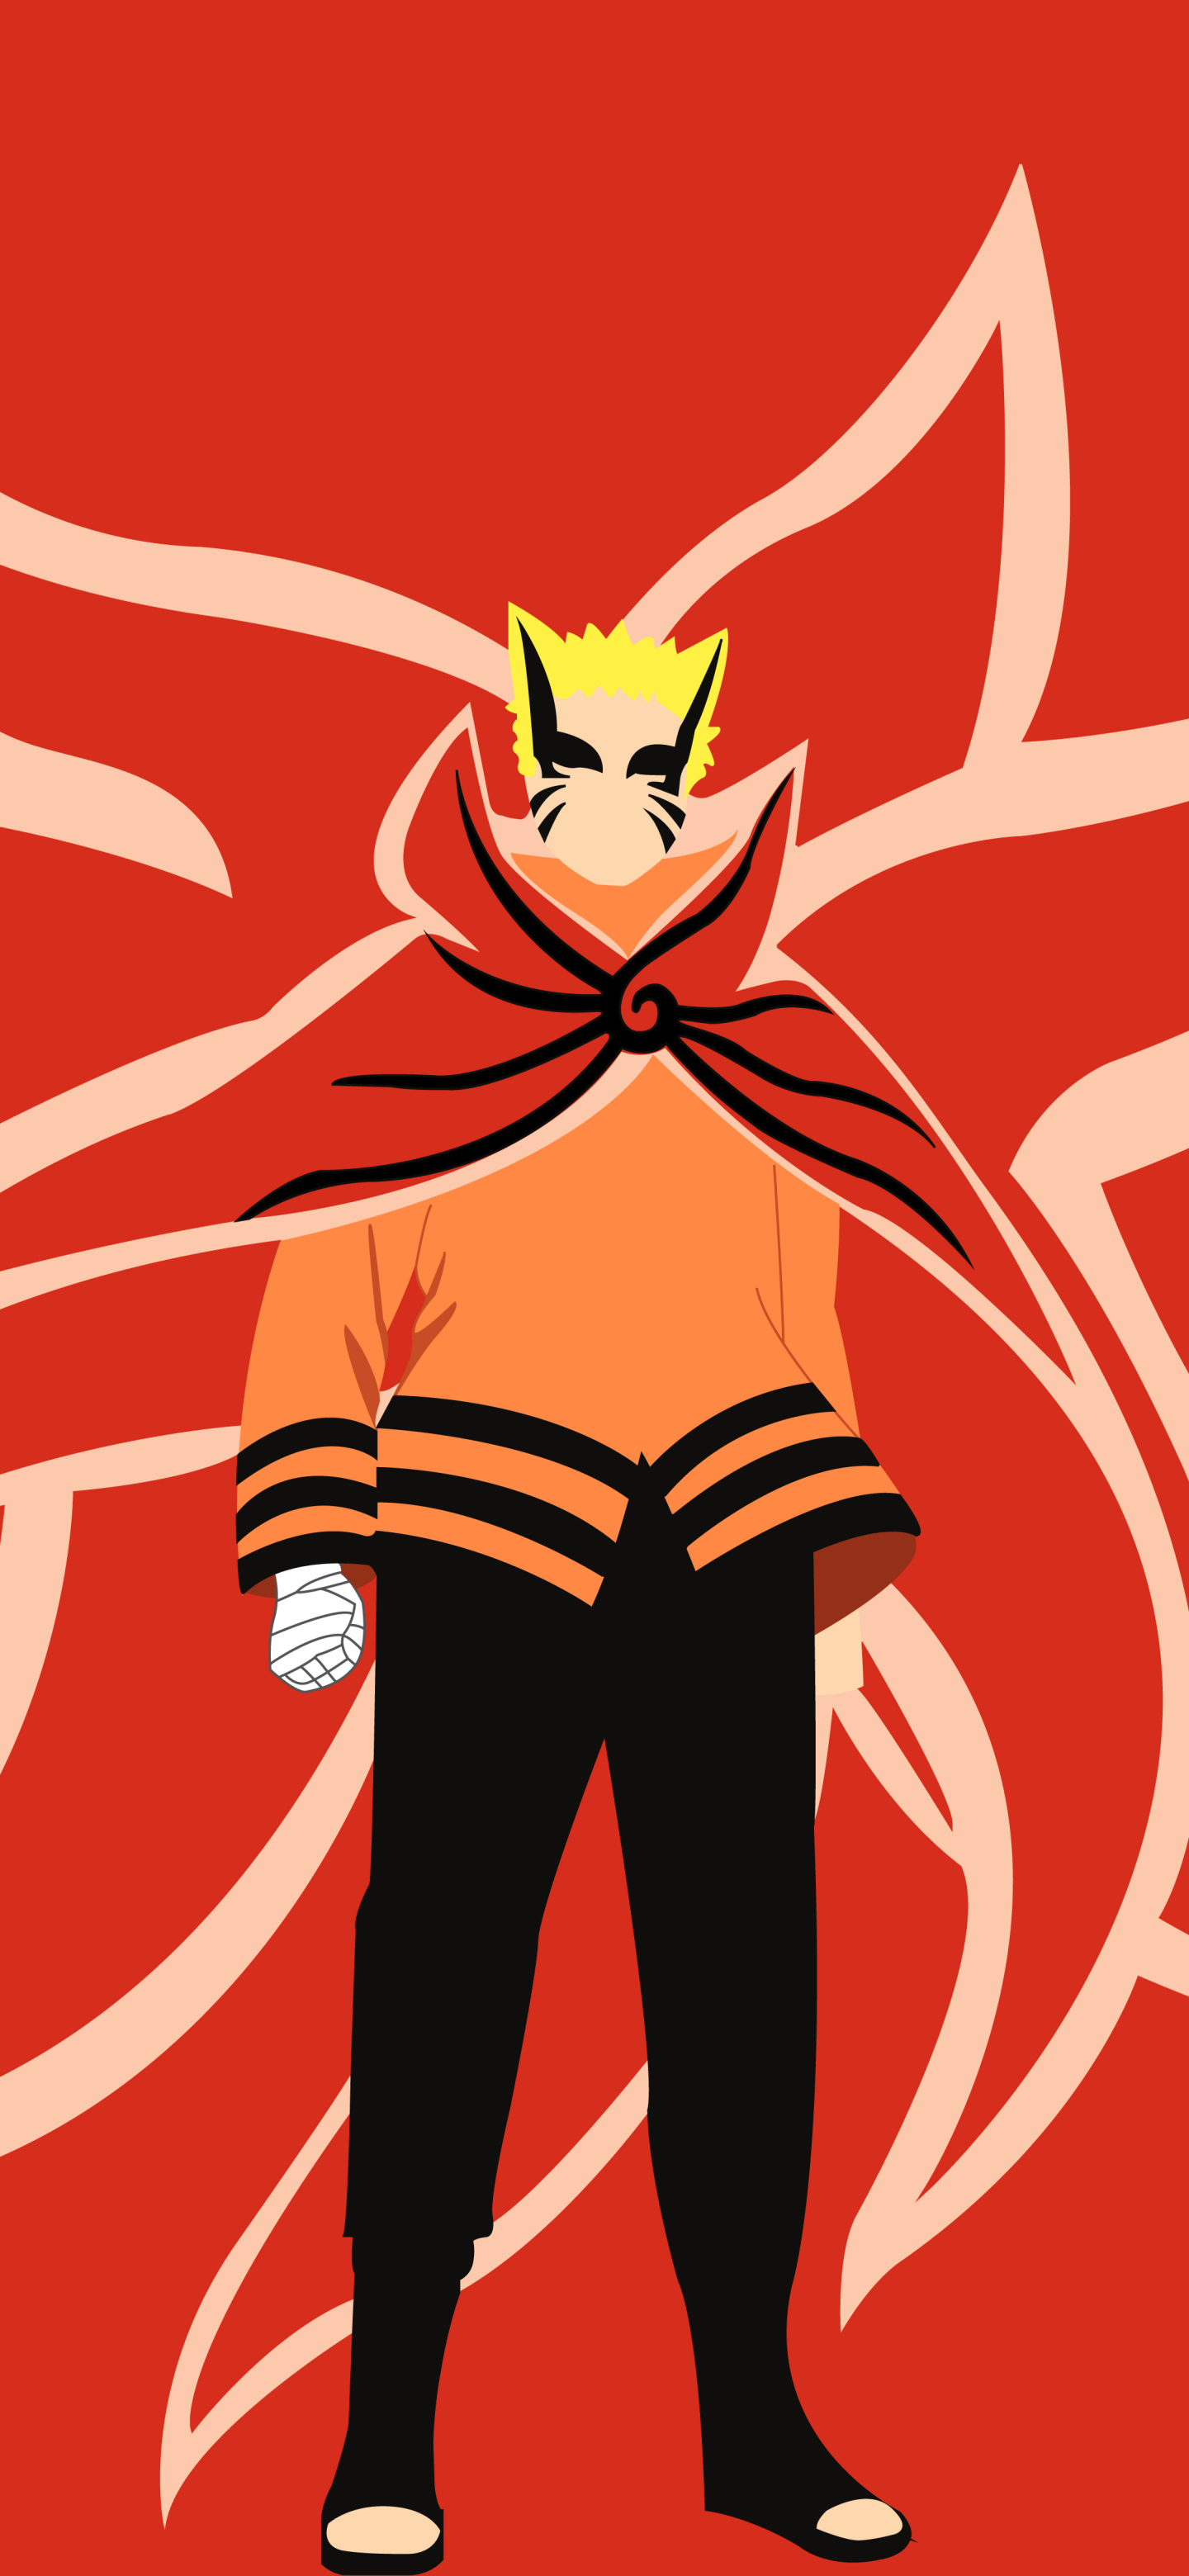 Baixe gratuitamente a imagem Anime, Naruto, Boruto, Modo Baryon (Naruto) na área de trabalho do seu PC